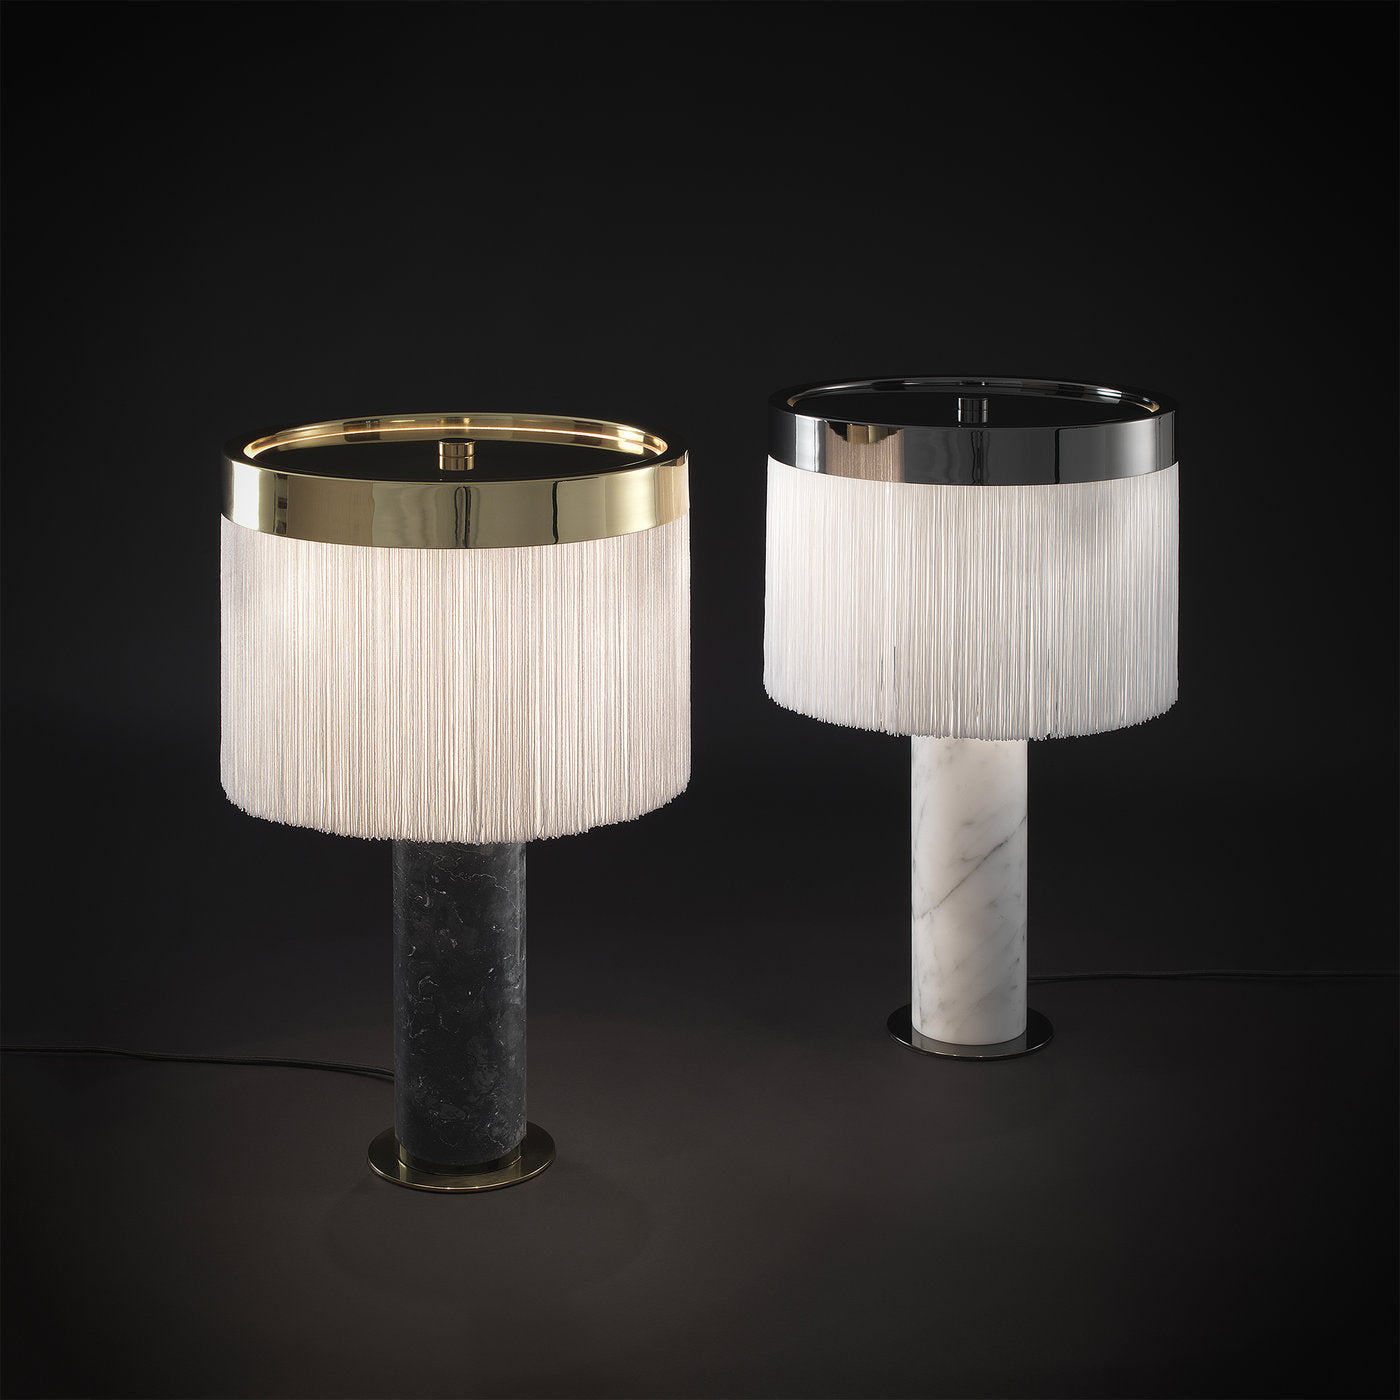 Orsola Gold & White Table Lamp by Lorenza Bozzoli - Alternative view 2